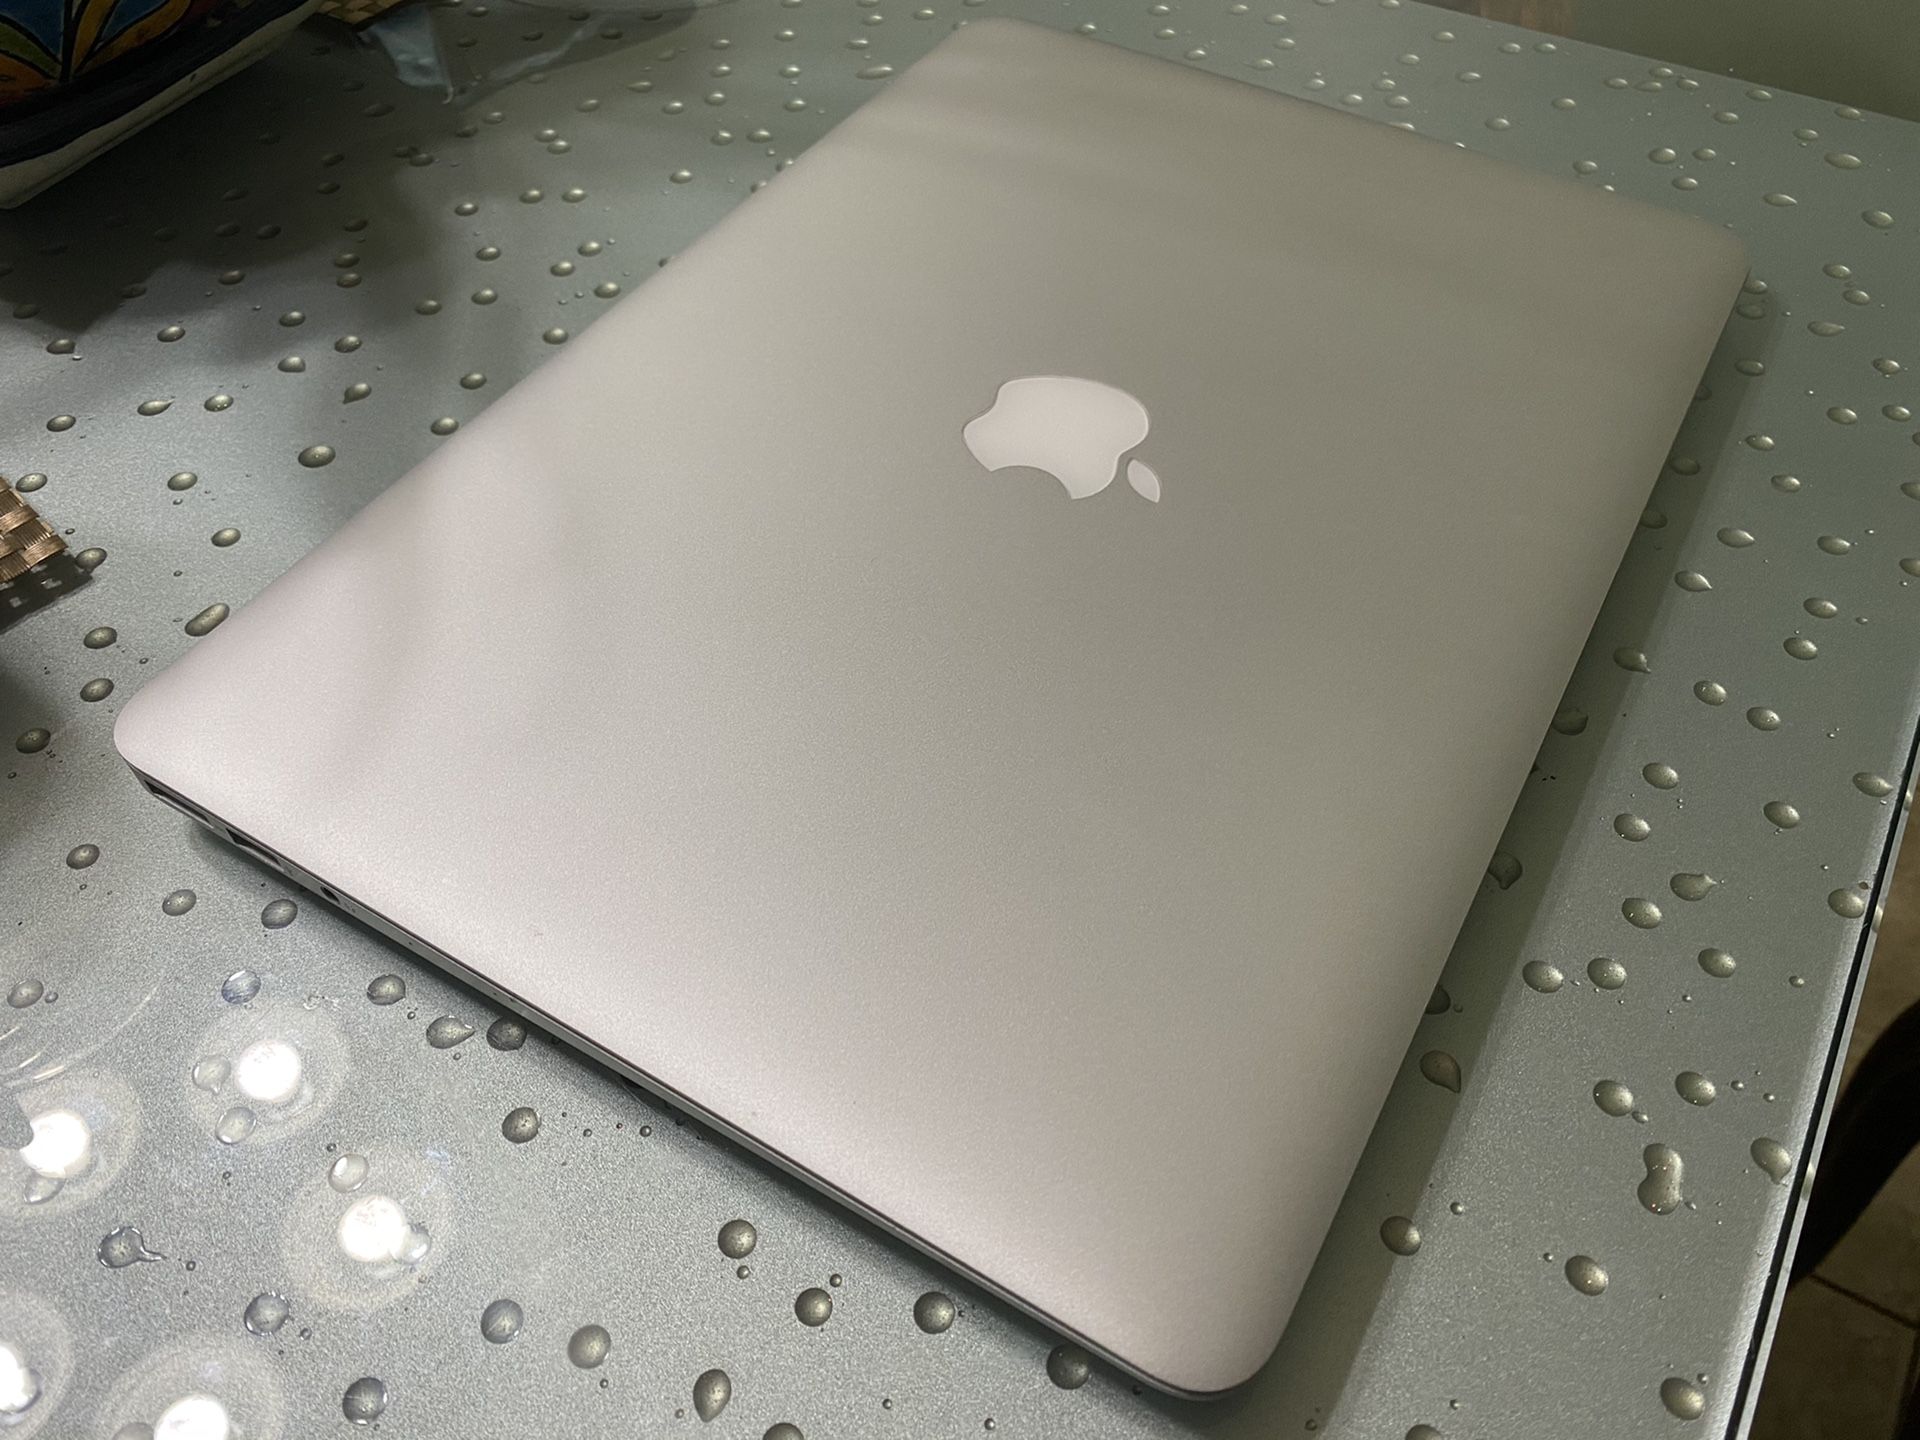 MacBook Air 13” for sale